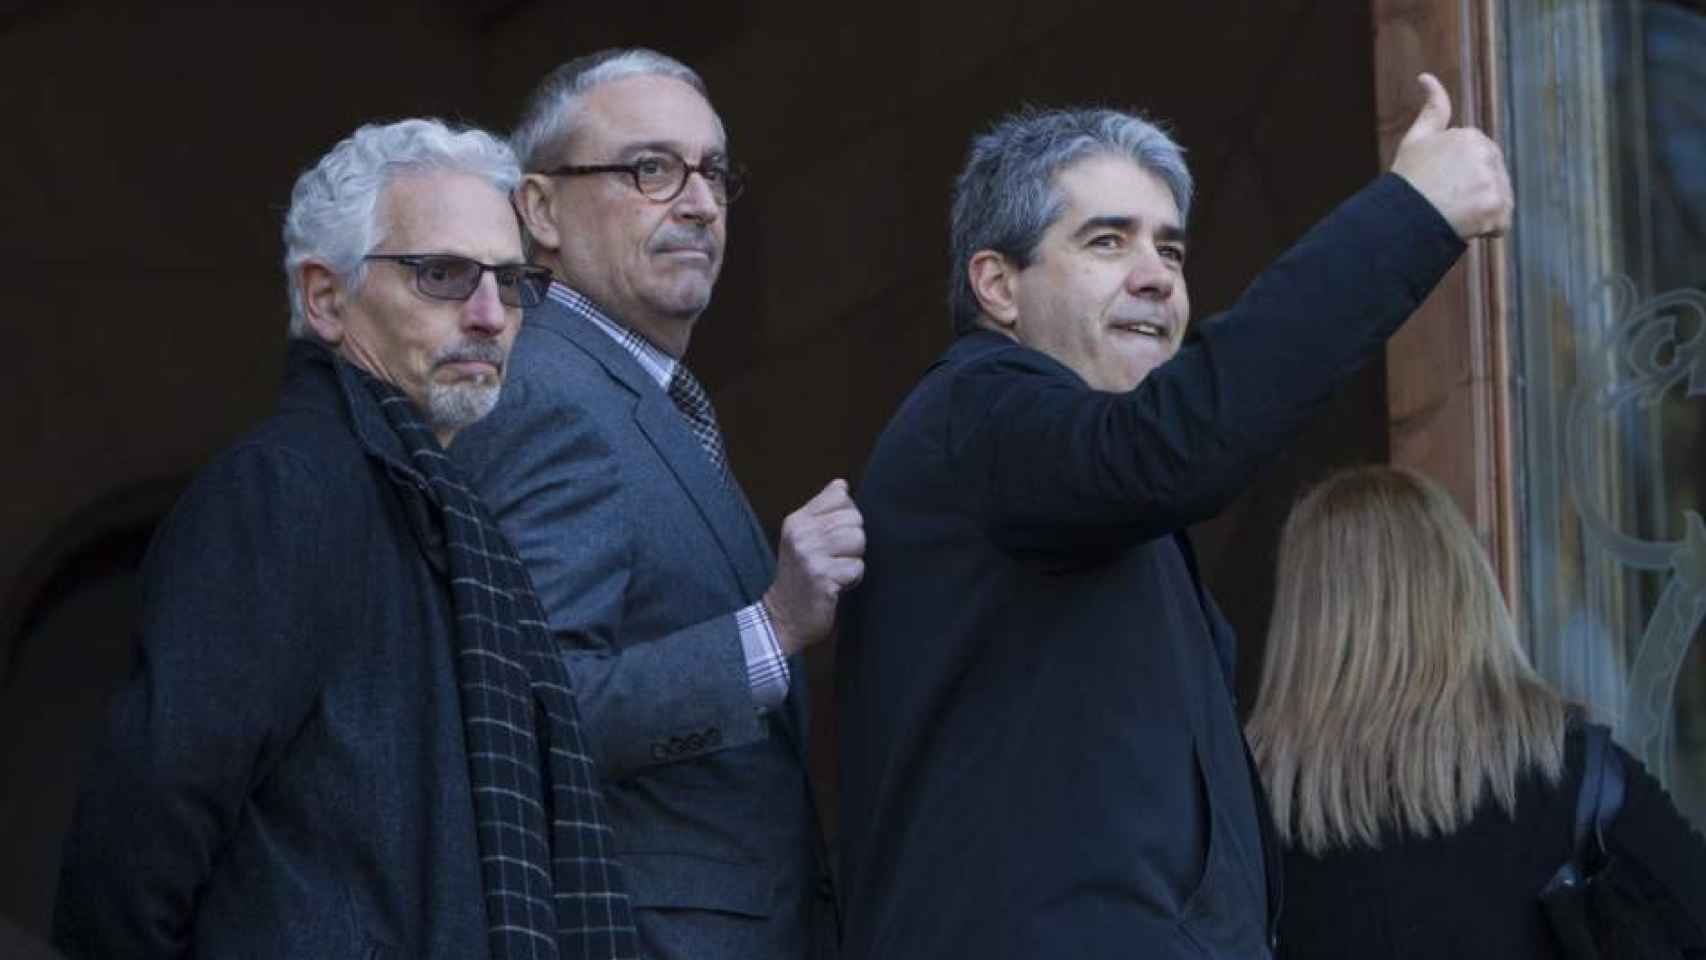 Francesc Homs, portavoz de Democràcia i Llibertat en el Congreso de los Diputados, antes de declarar ante el TSJC, junto al juez Santi Vila.